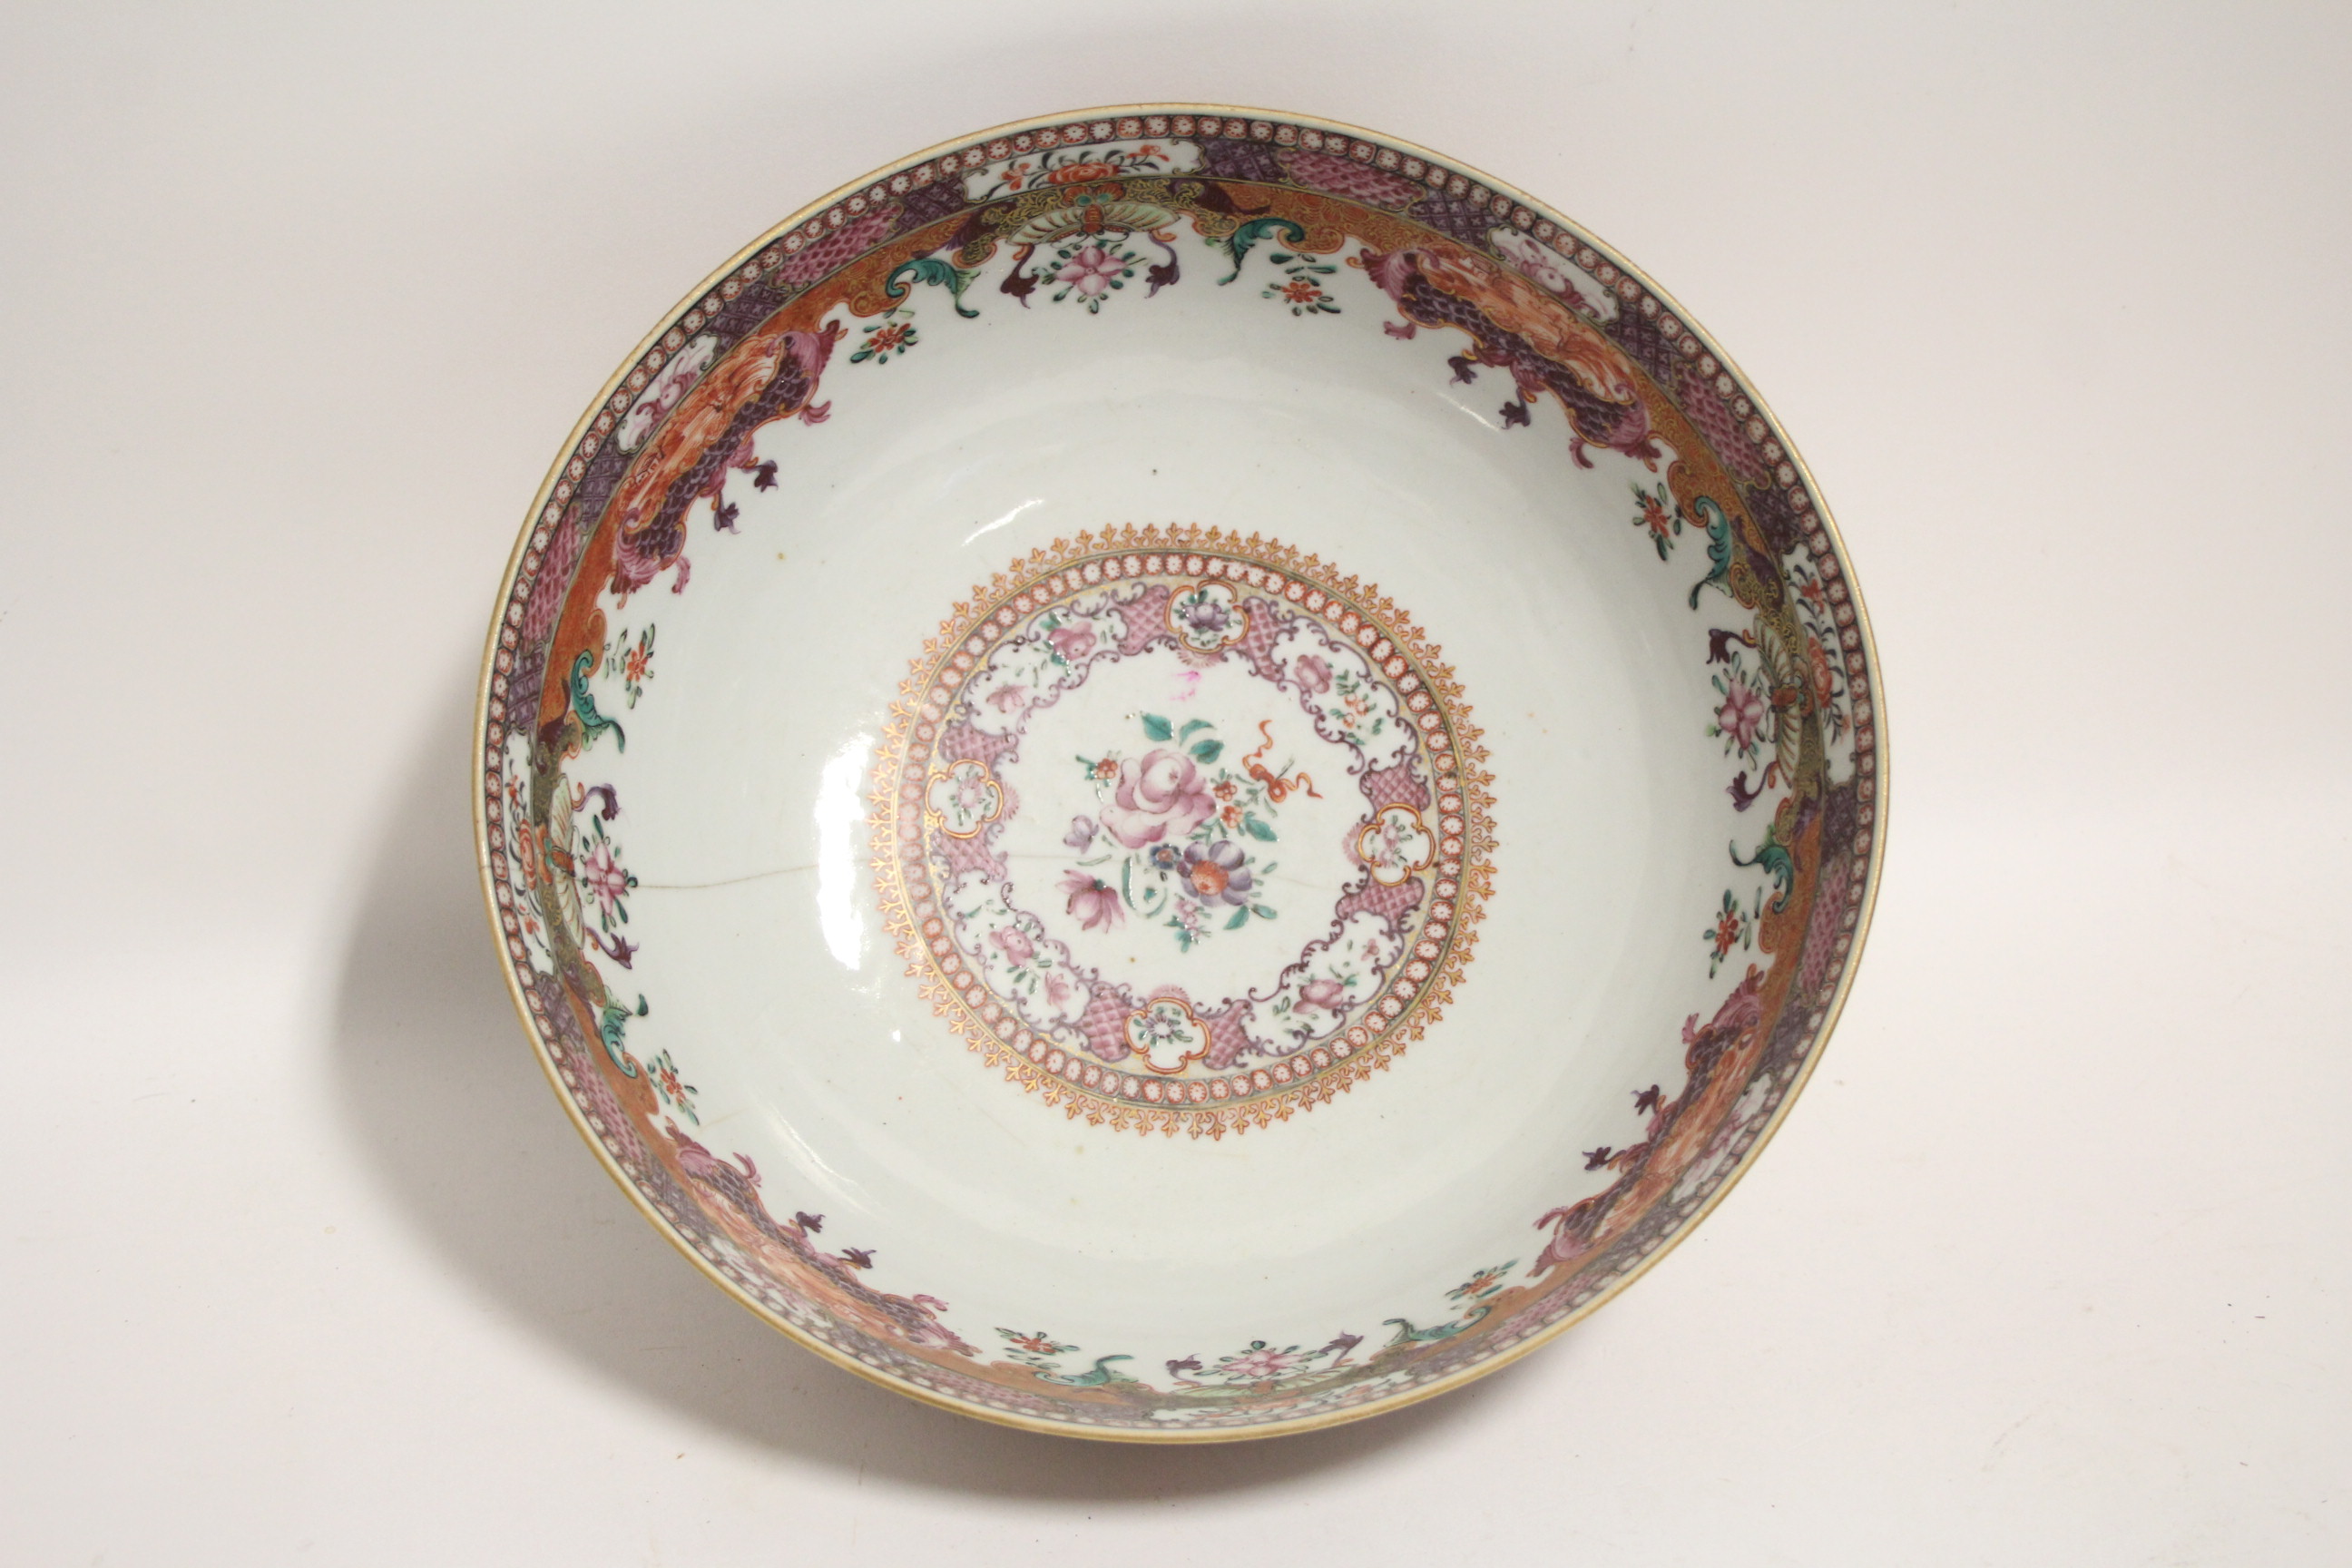 An 18th century Chinese porcelain "Mandarin" pattern punch bowl; 11¼" diam. (cracked). - Image 3 of 5